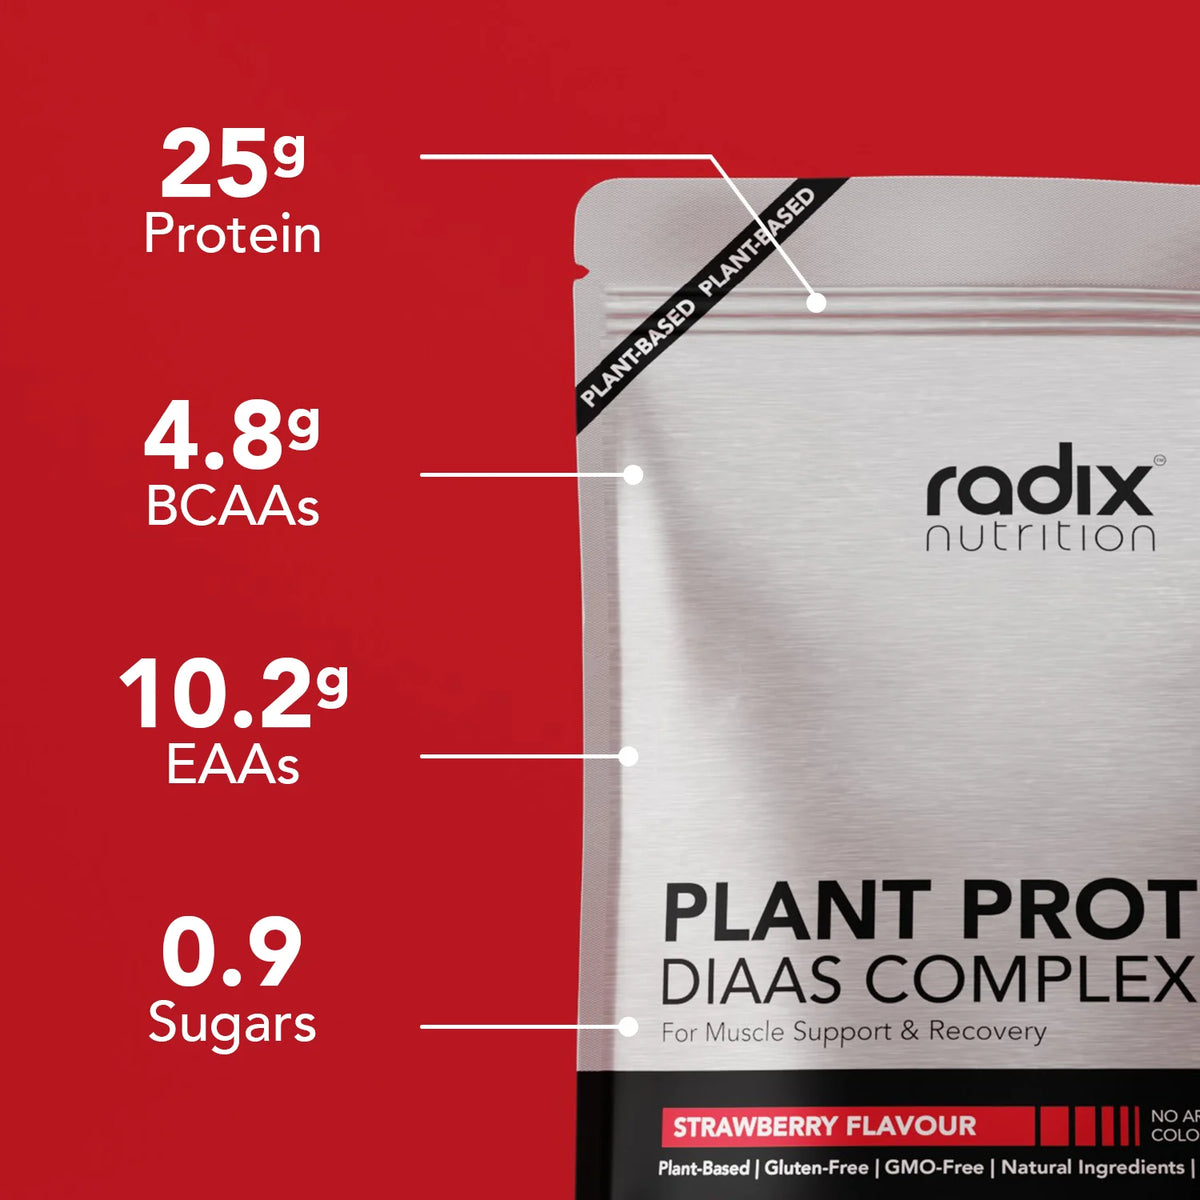 Plant Protein DIAAS Complex 1.30 - Strawberry / Single Serve